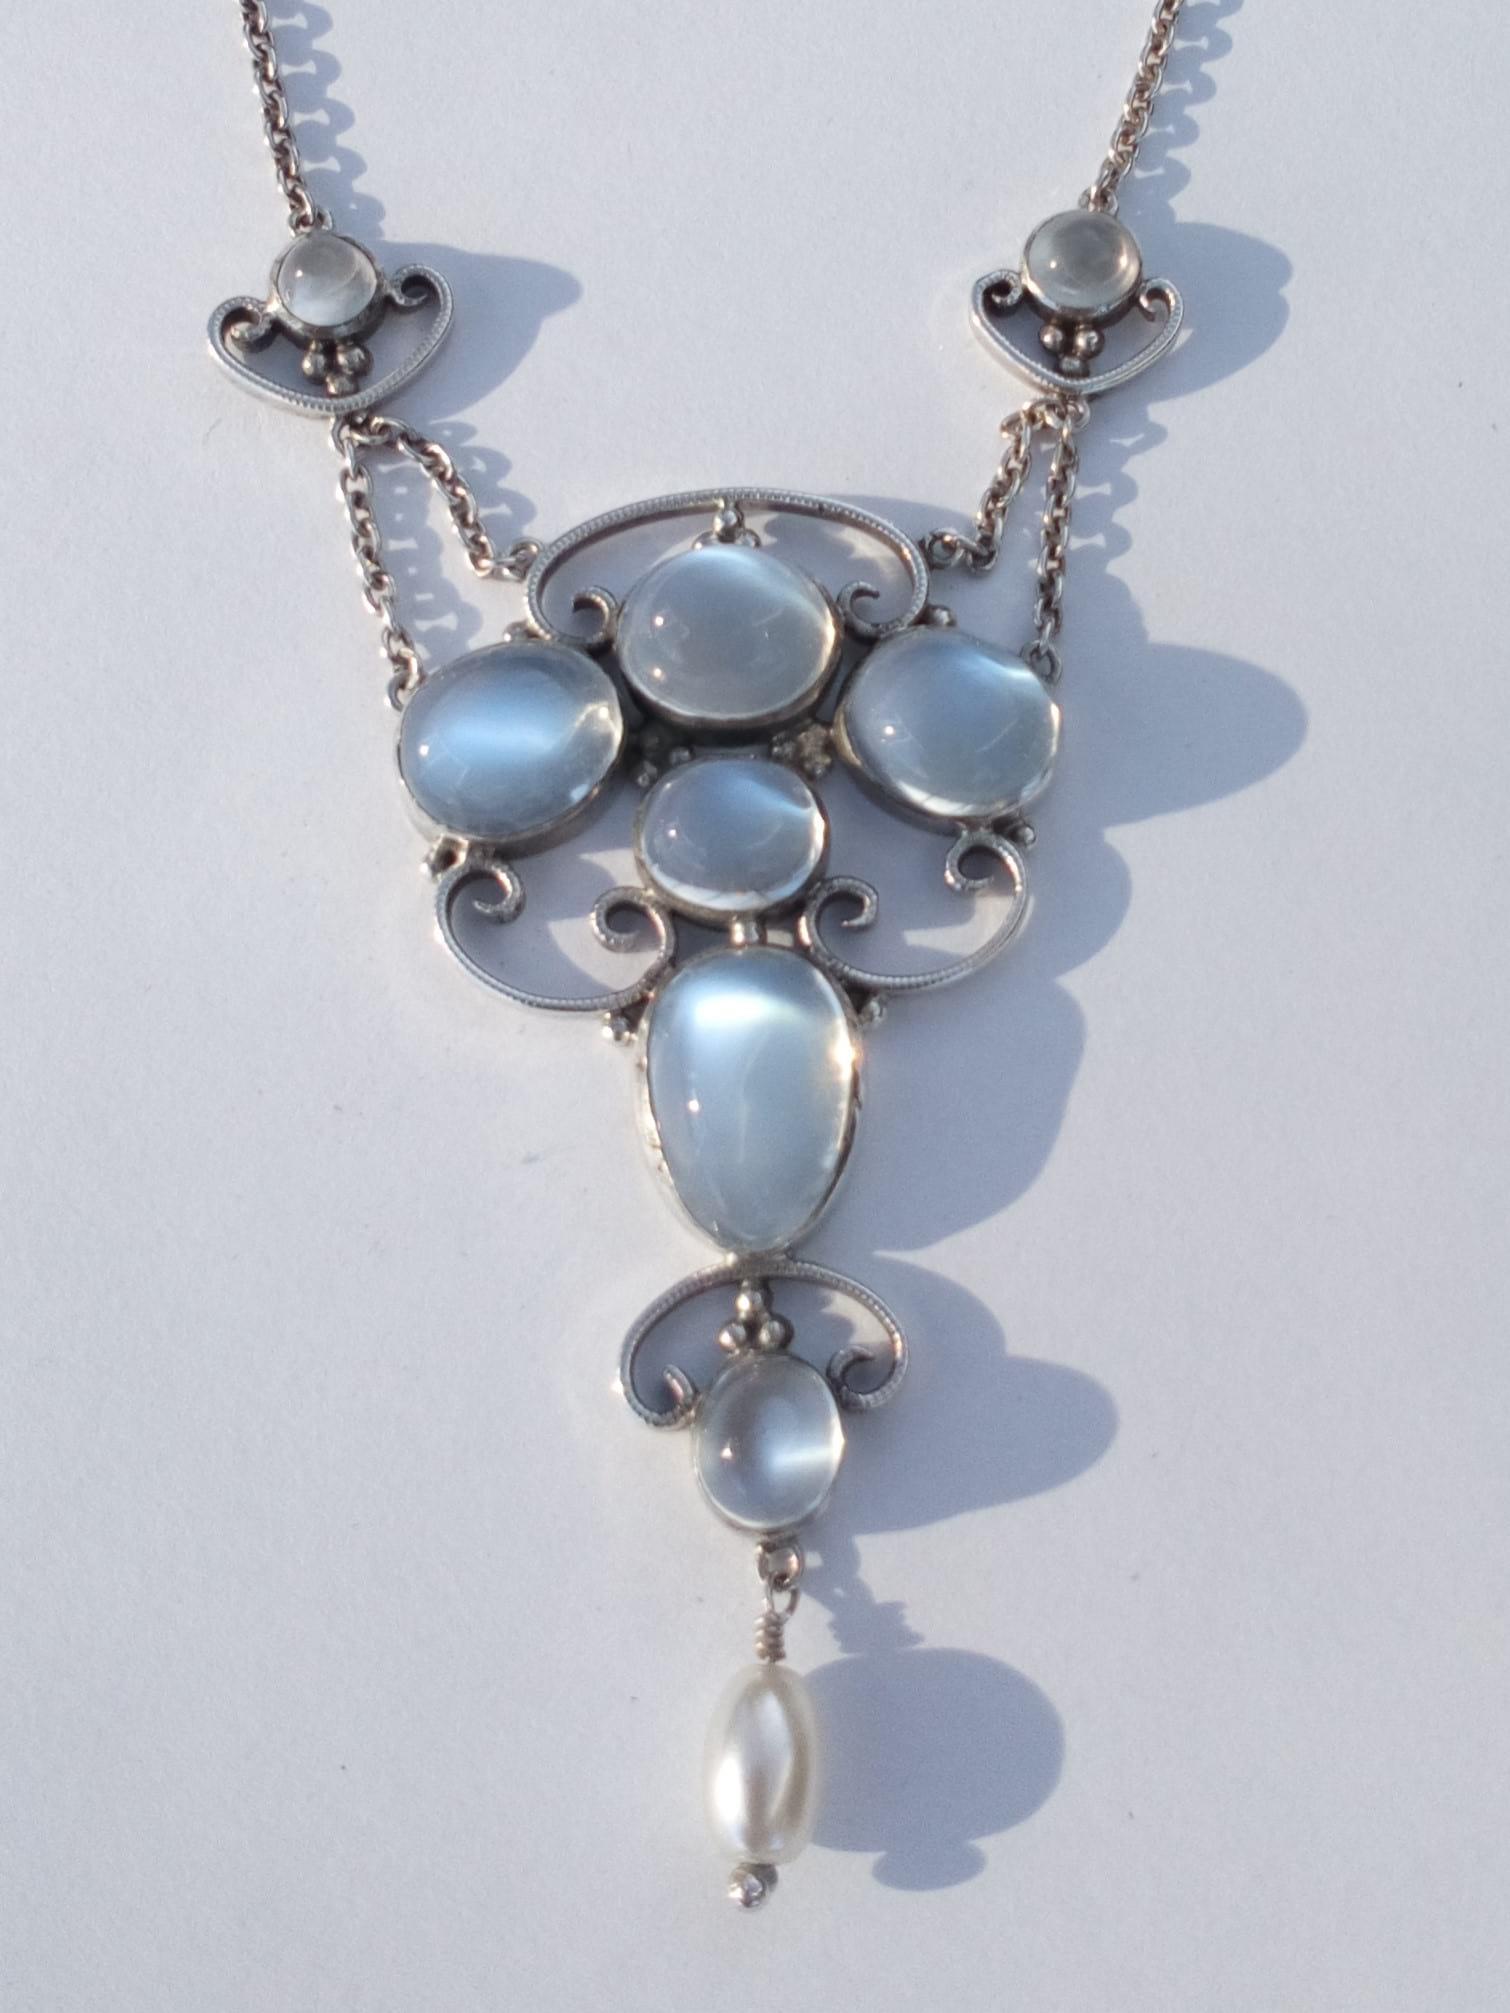 Antique Arts and Crafts Silver Moonstone Dropper Pendant Lavaliere Necklace circa 1910